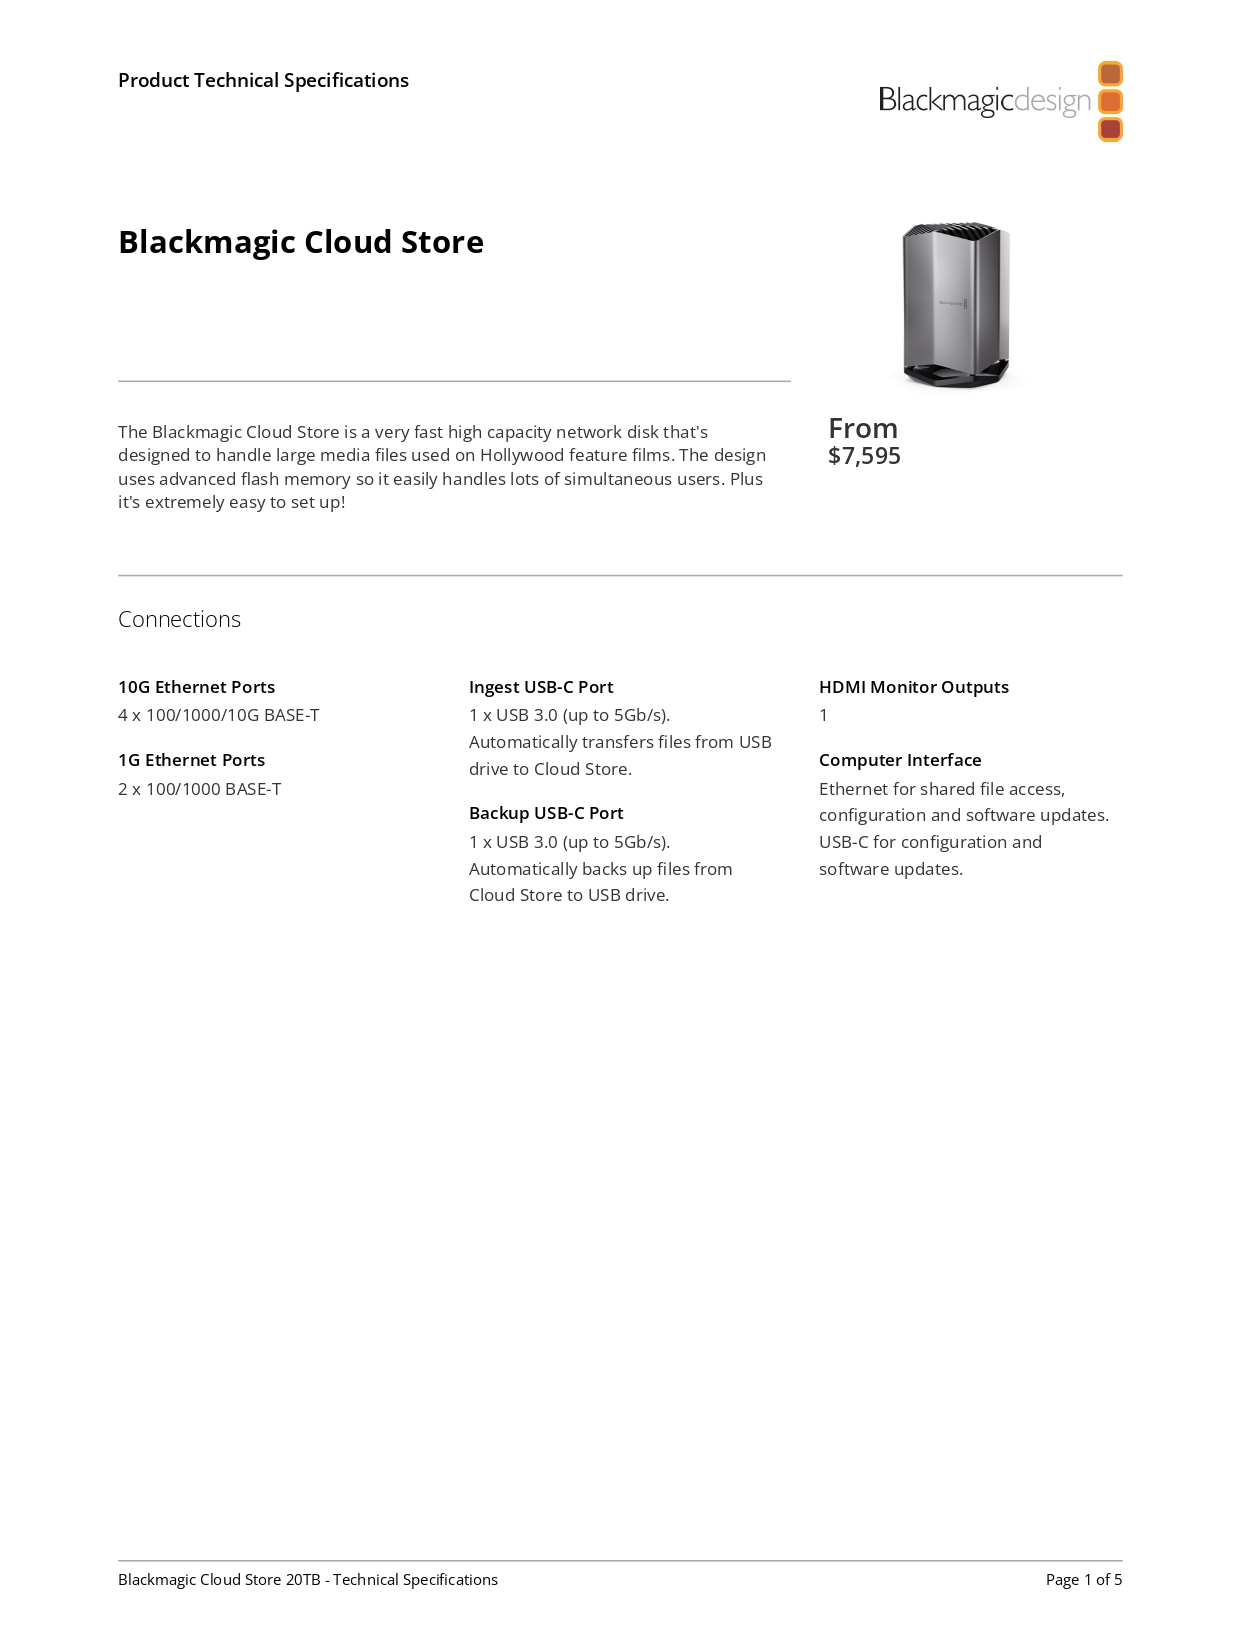 Blackmagic Design Cloud Store - 001